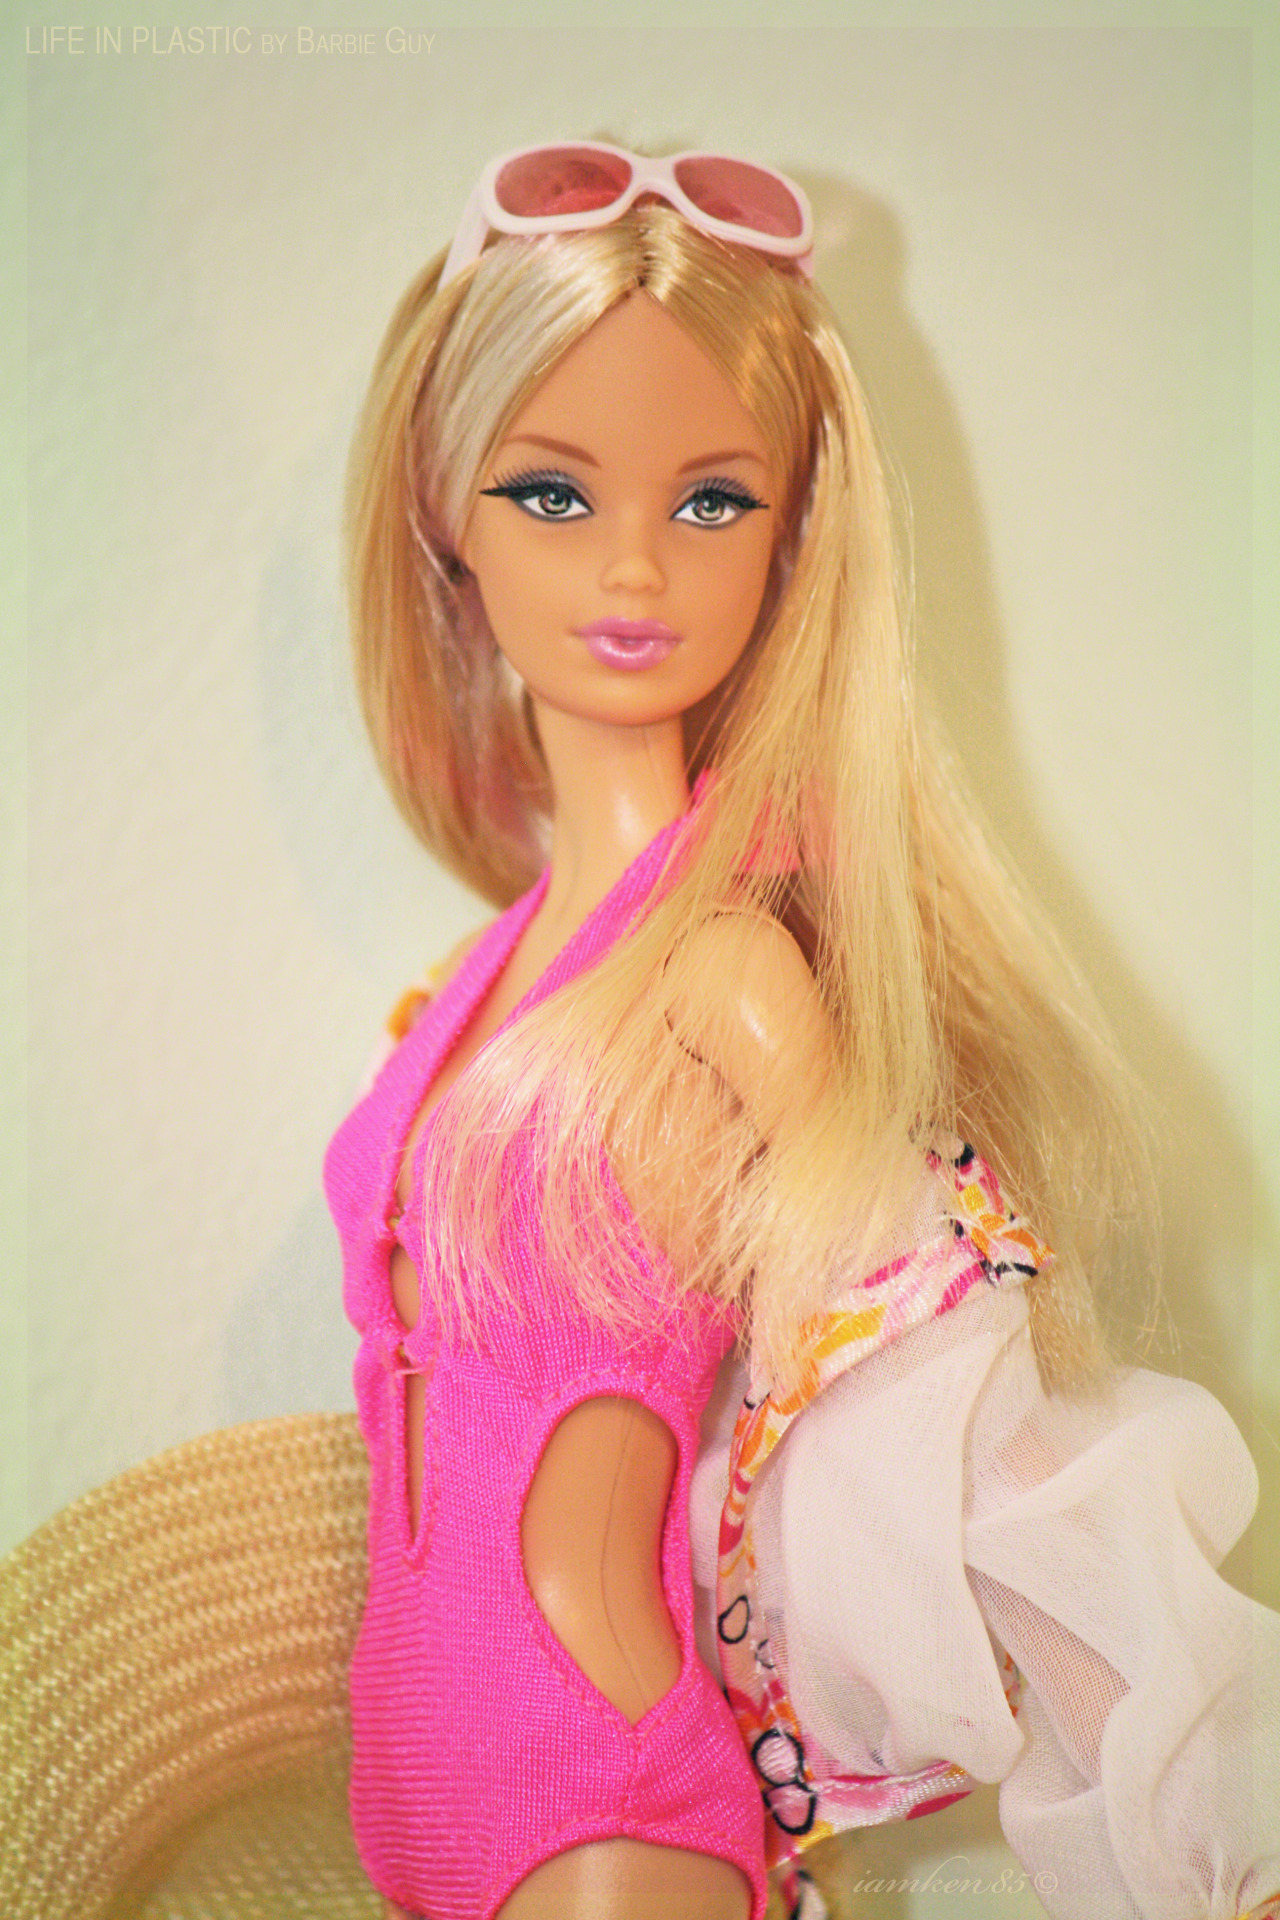 barbie look city shopper